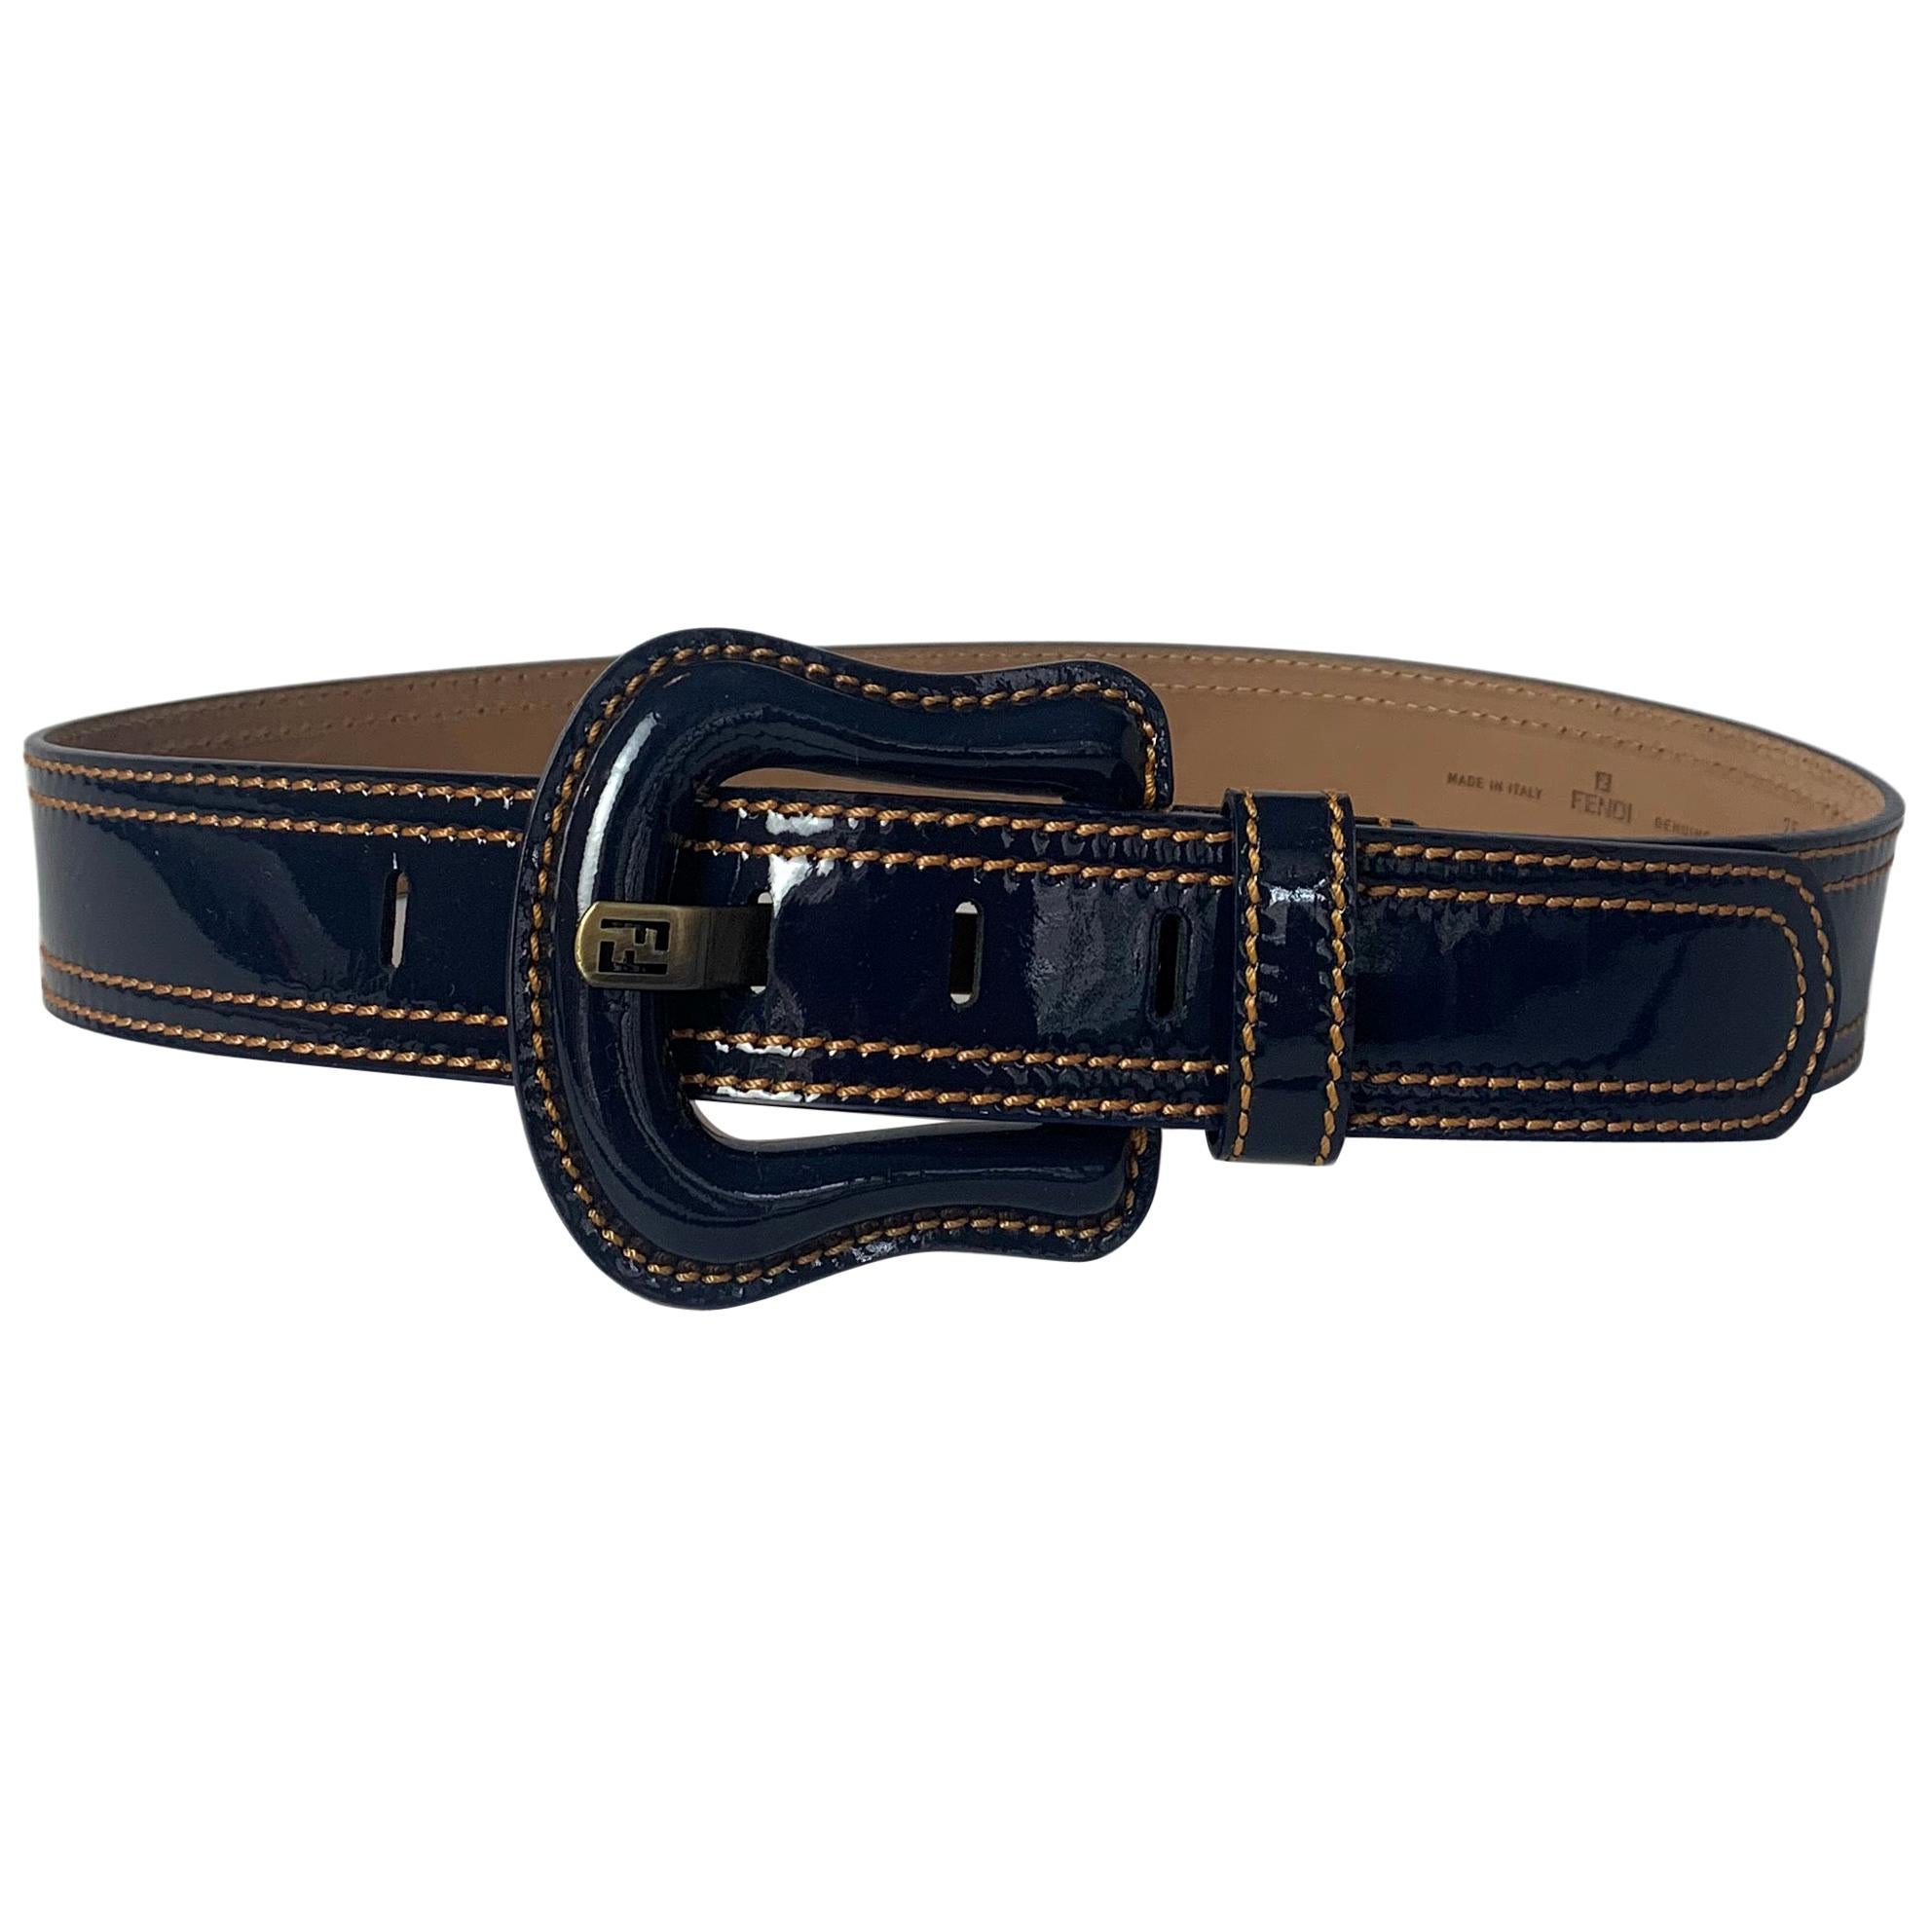 Fendi Navy Blue Patent Leather Buckle Belt w/ Contrast Stitching sz 75cm/30"